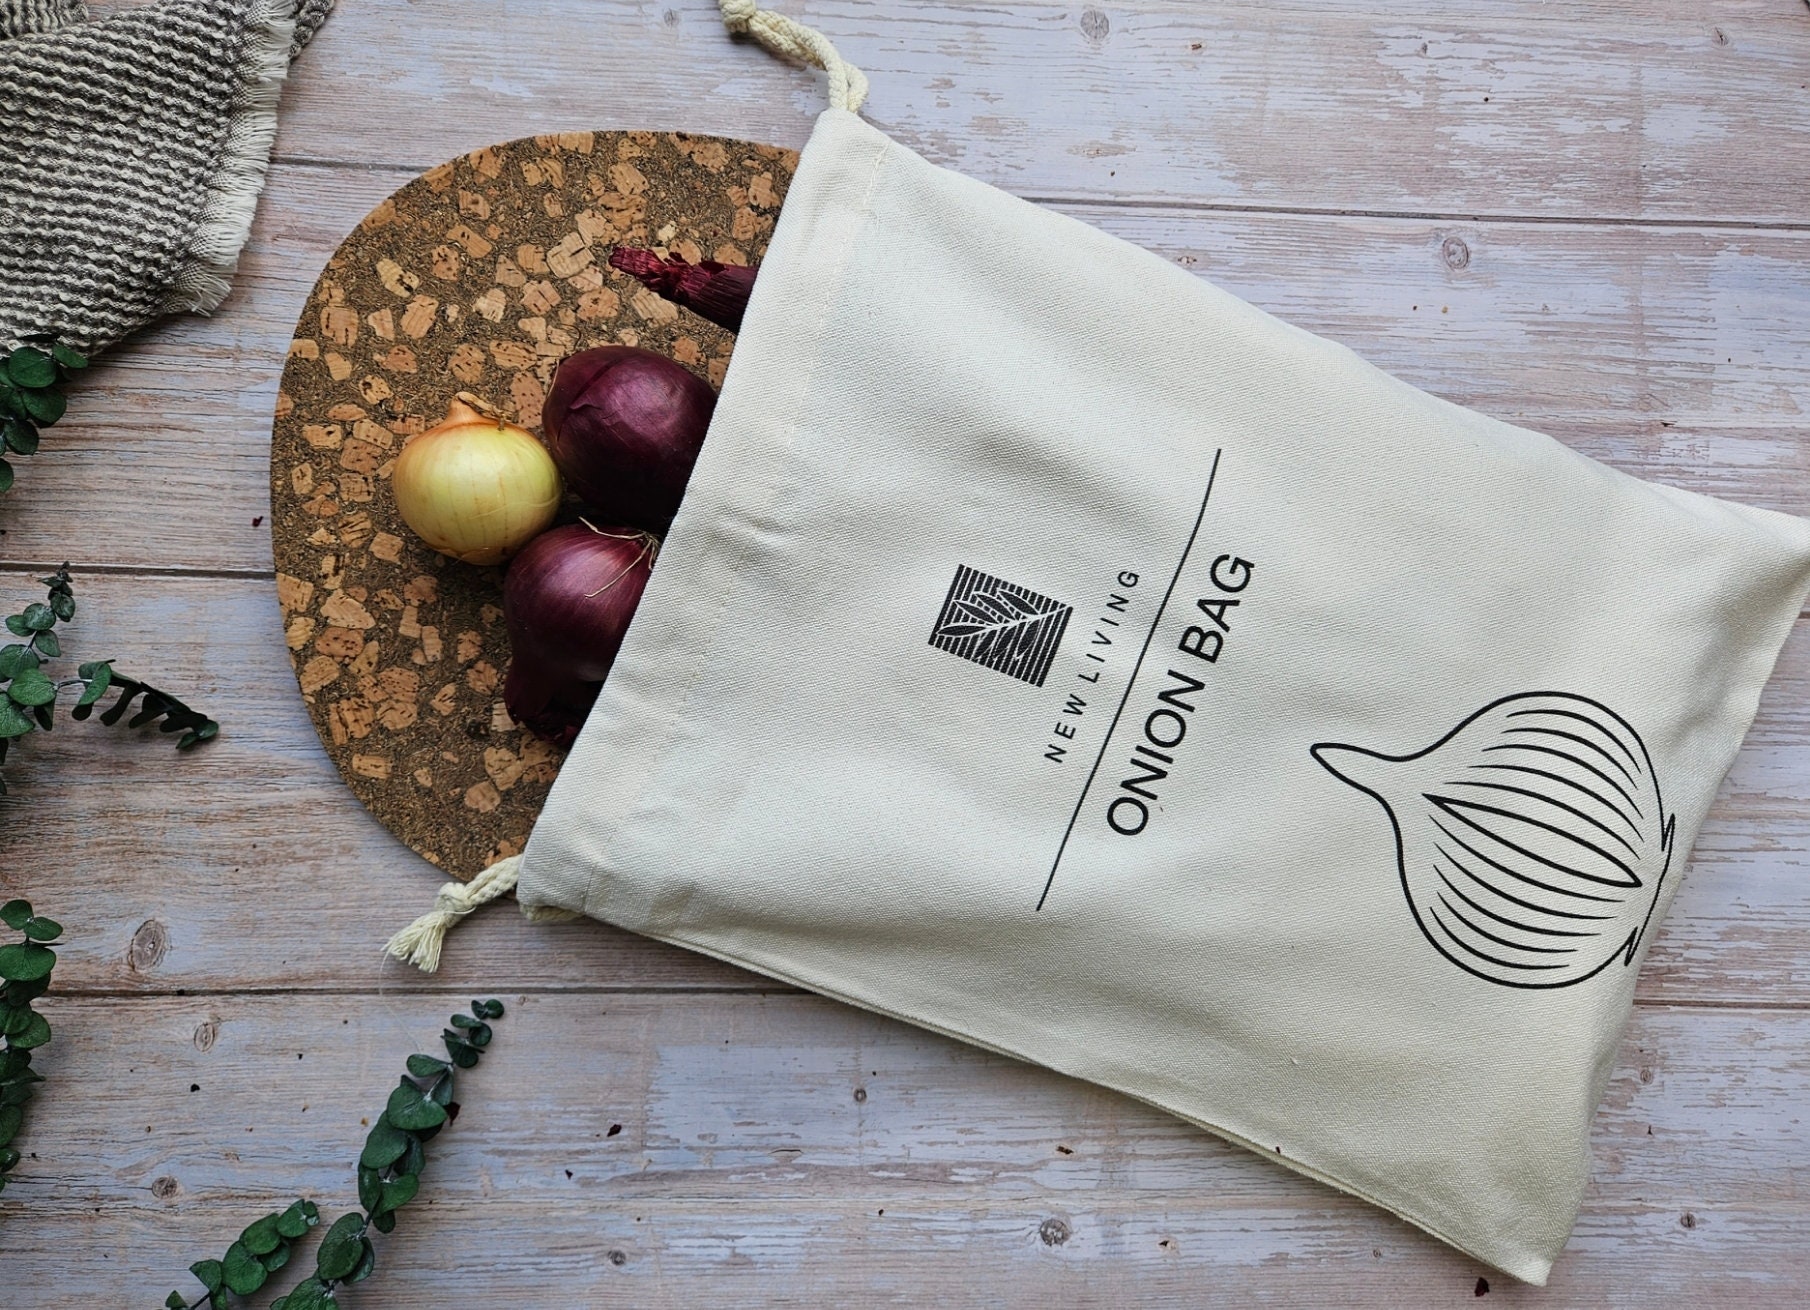 Linen Food Storage Bags, Onion Bag, Potato Bag, Bread Bag, Linen